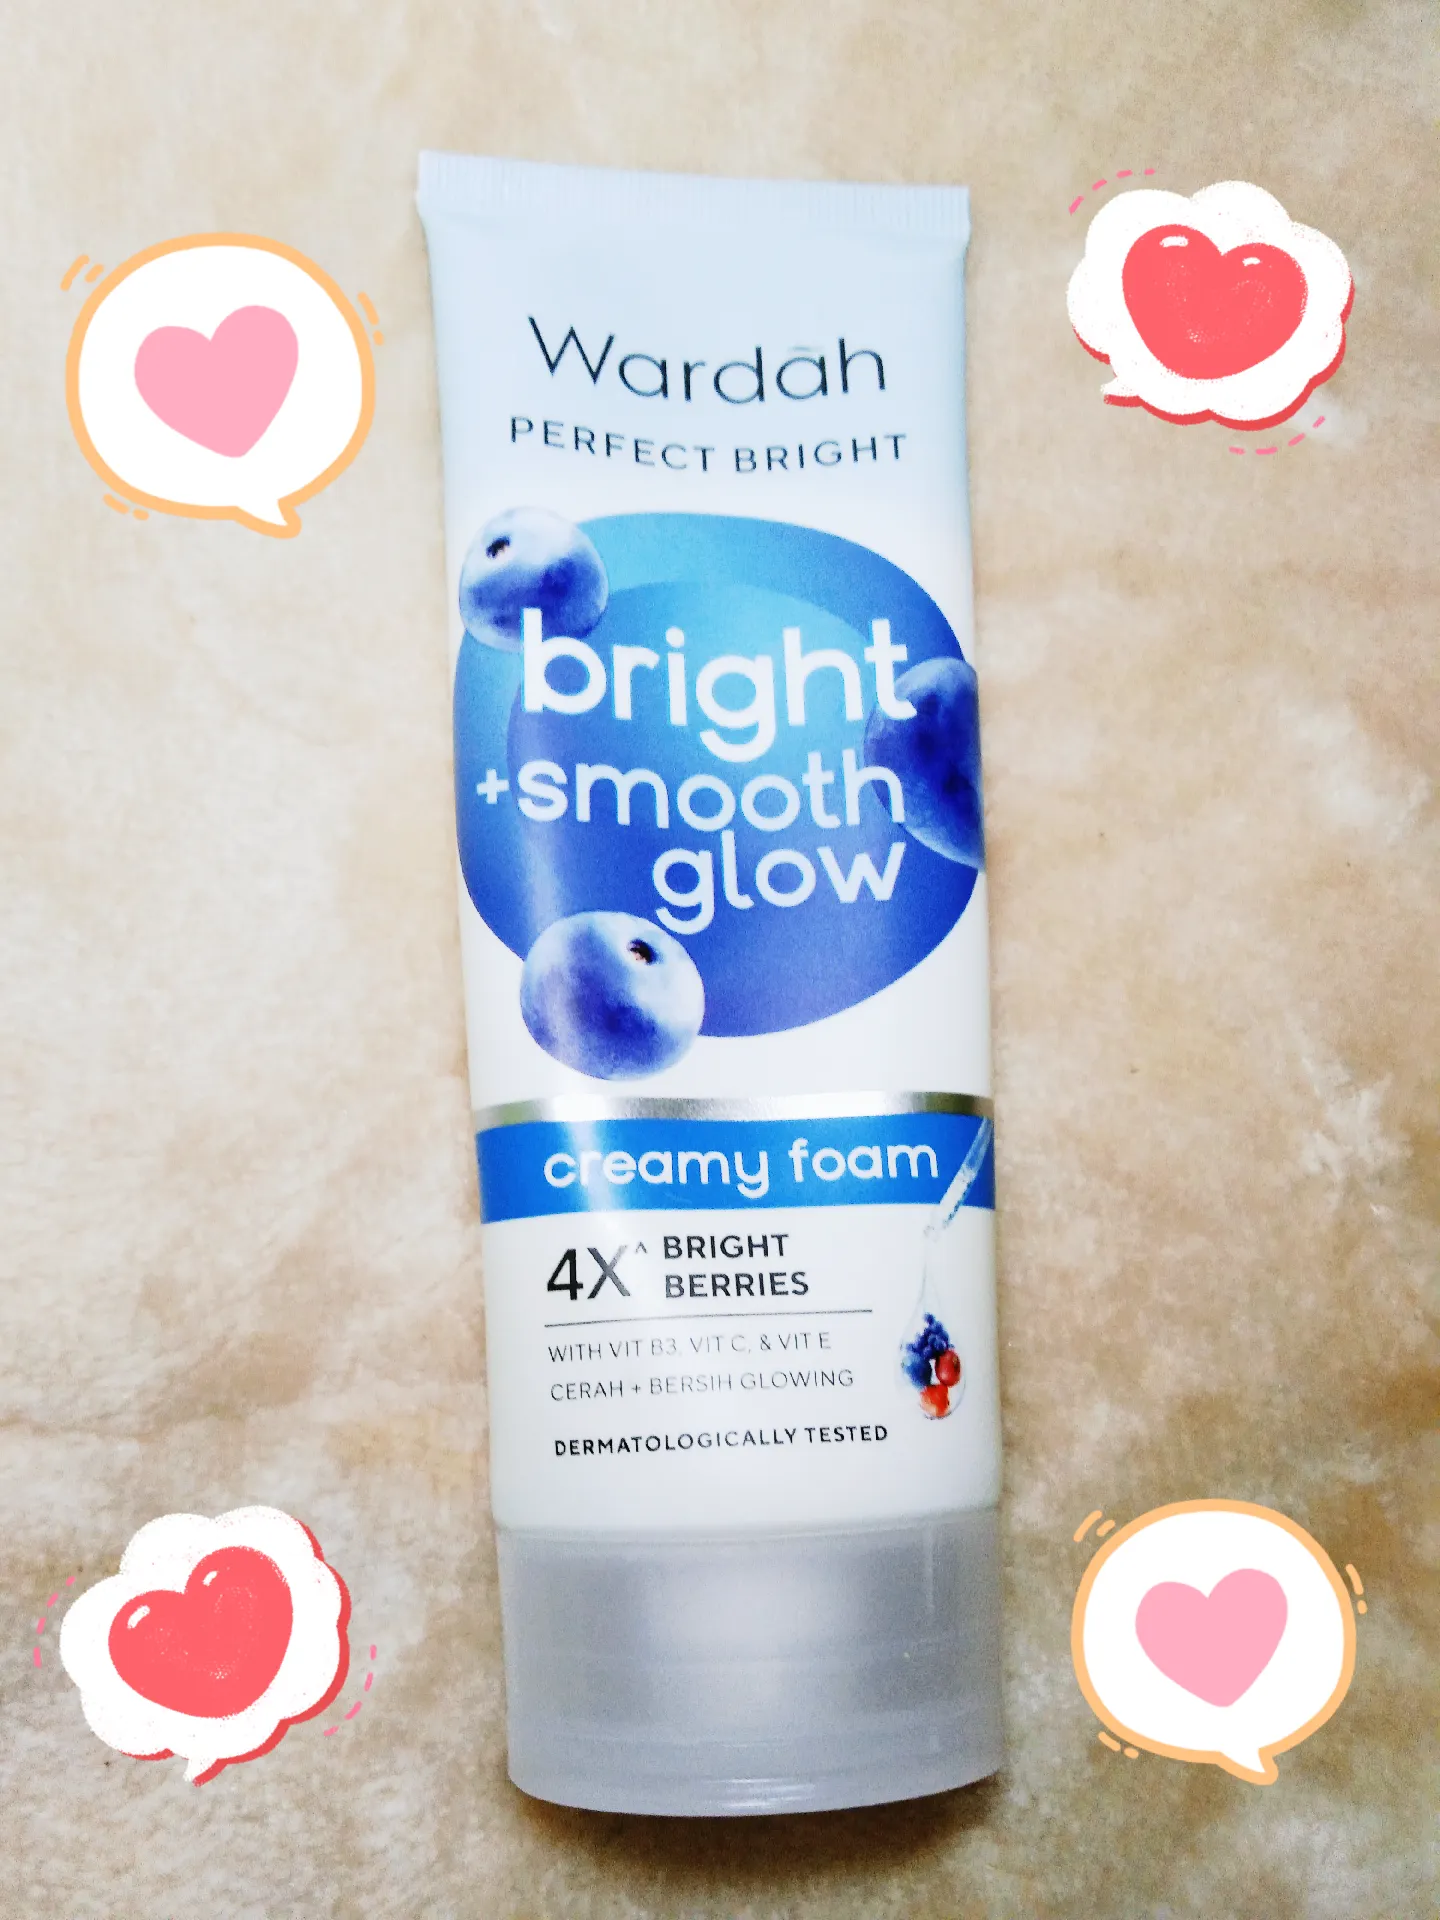 Wardah Perfect Bright Creamy Foam Bright + Oil Control 100ml - Guardian  Online Malaysia